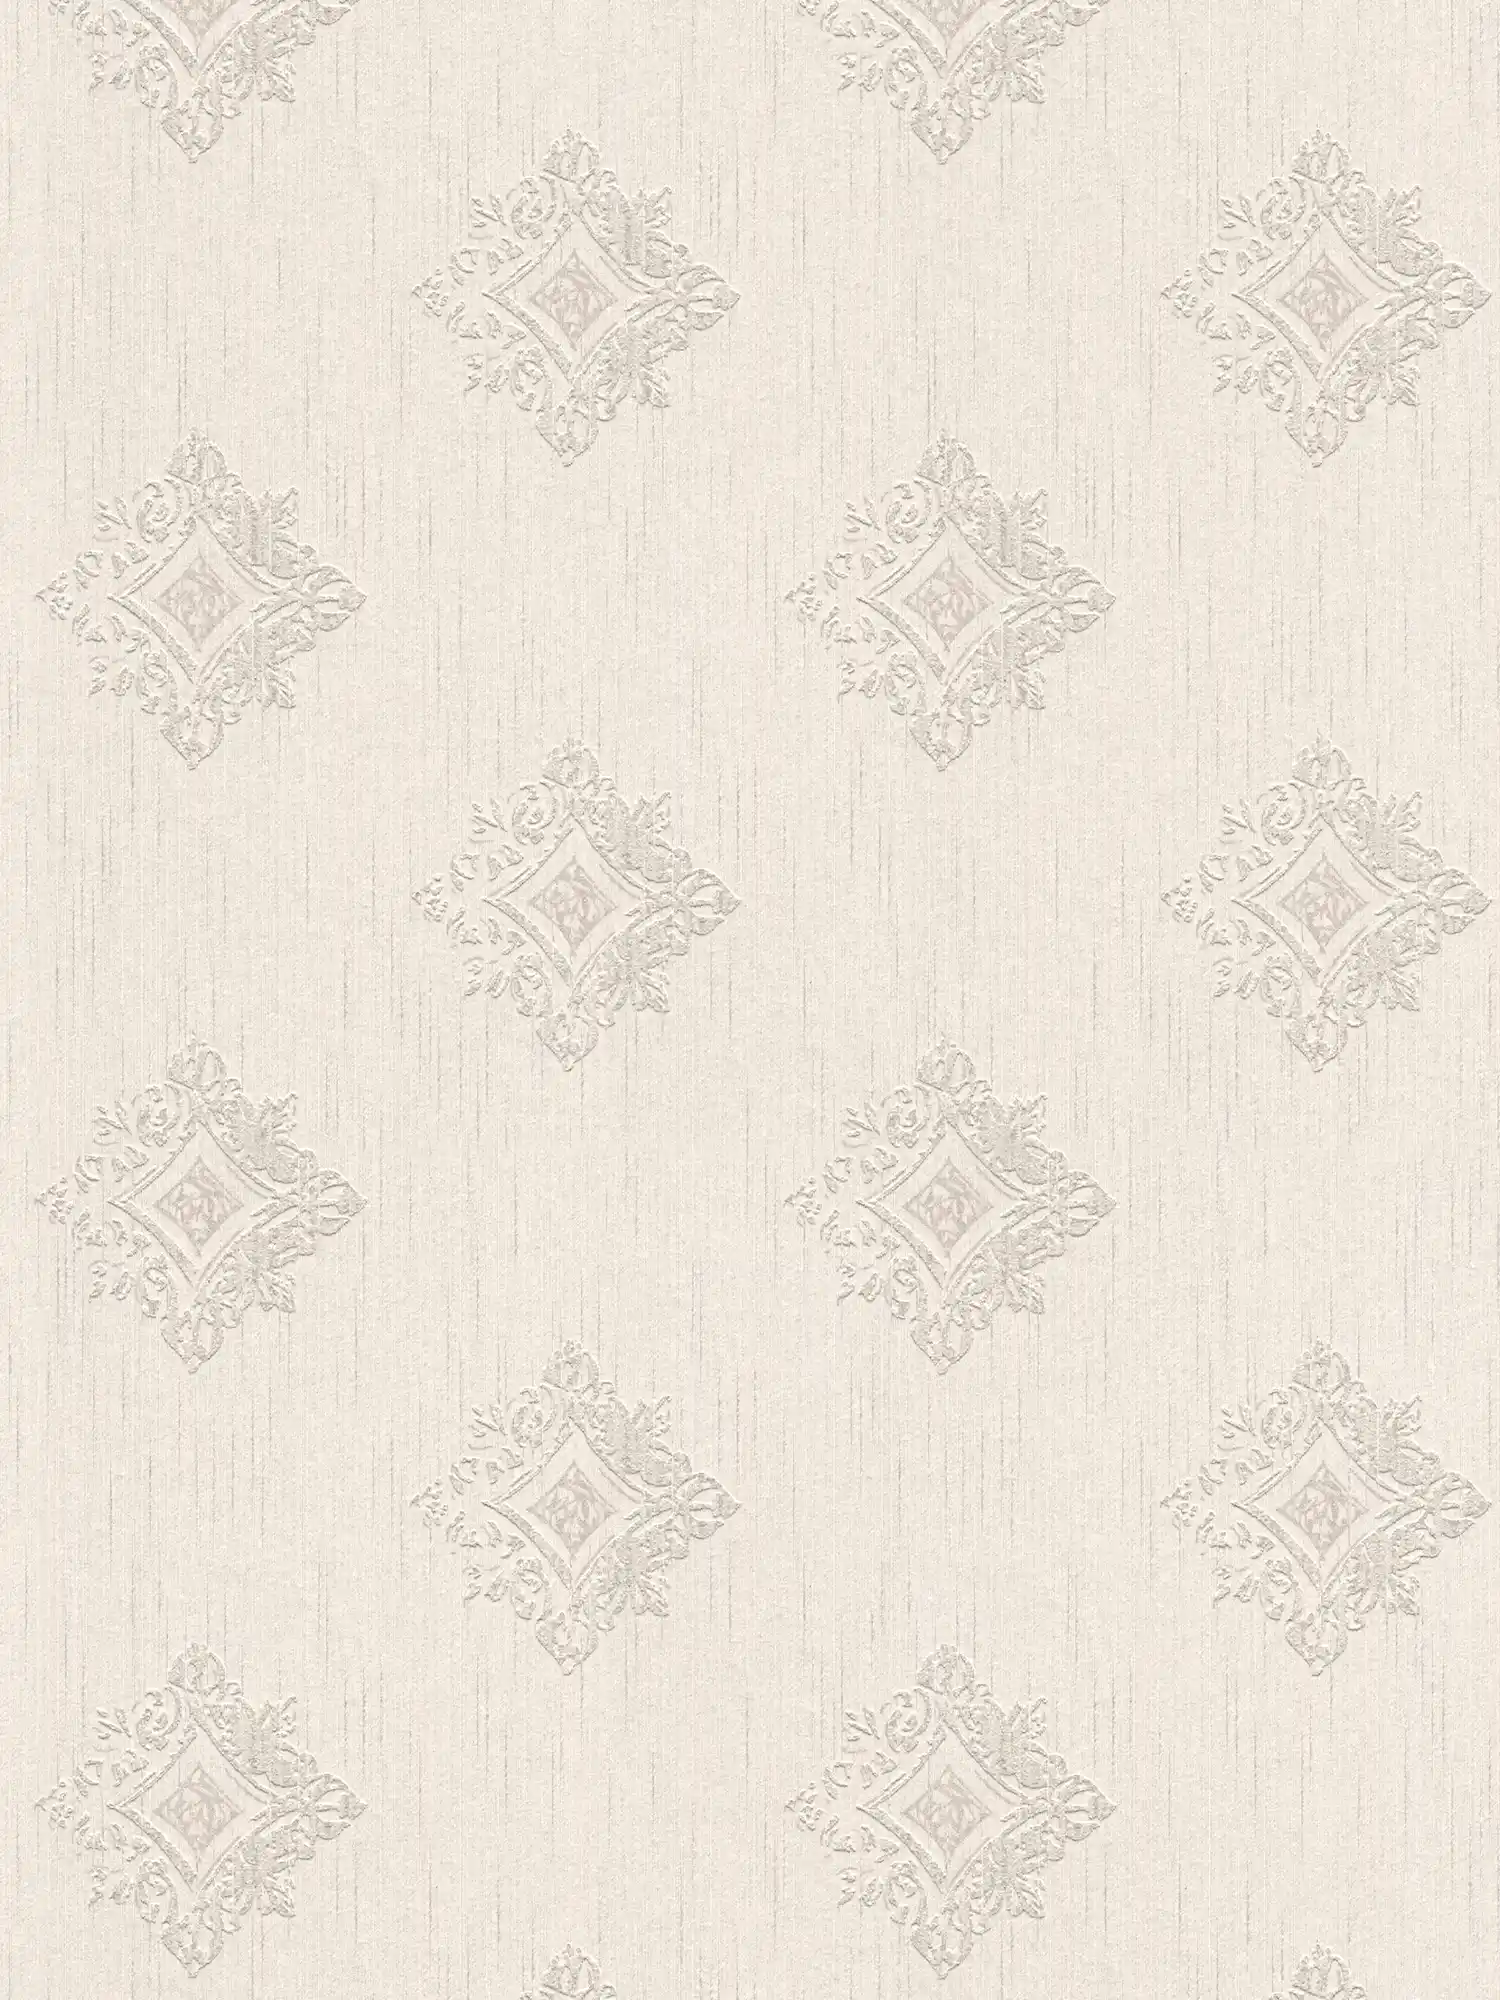         Papel pintado de aspecto de yeso con decoración de estuco en aspecto usado - crema
    